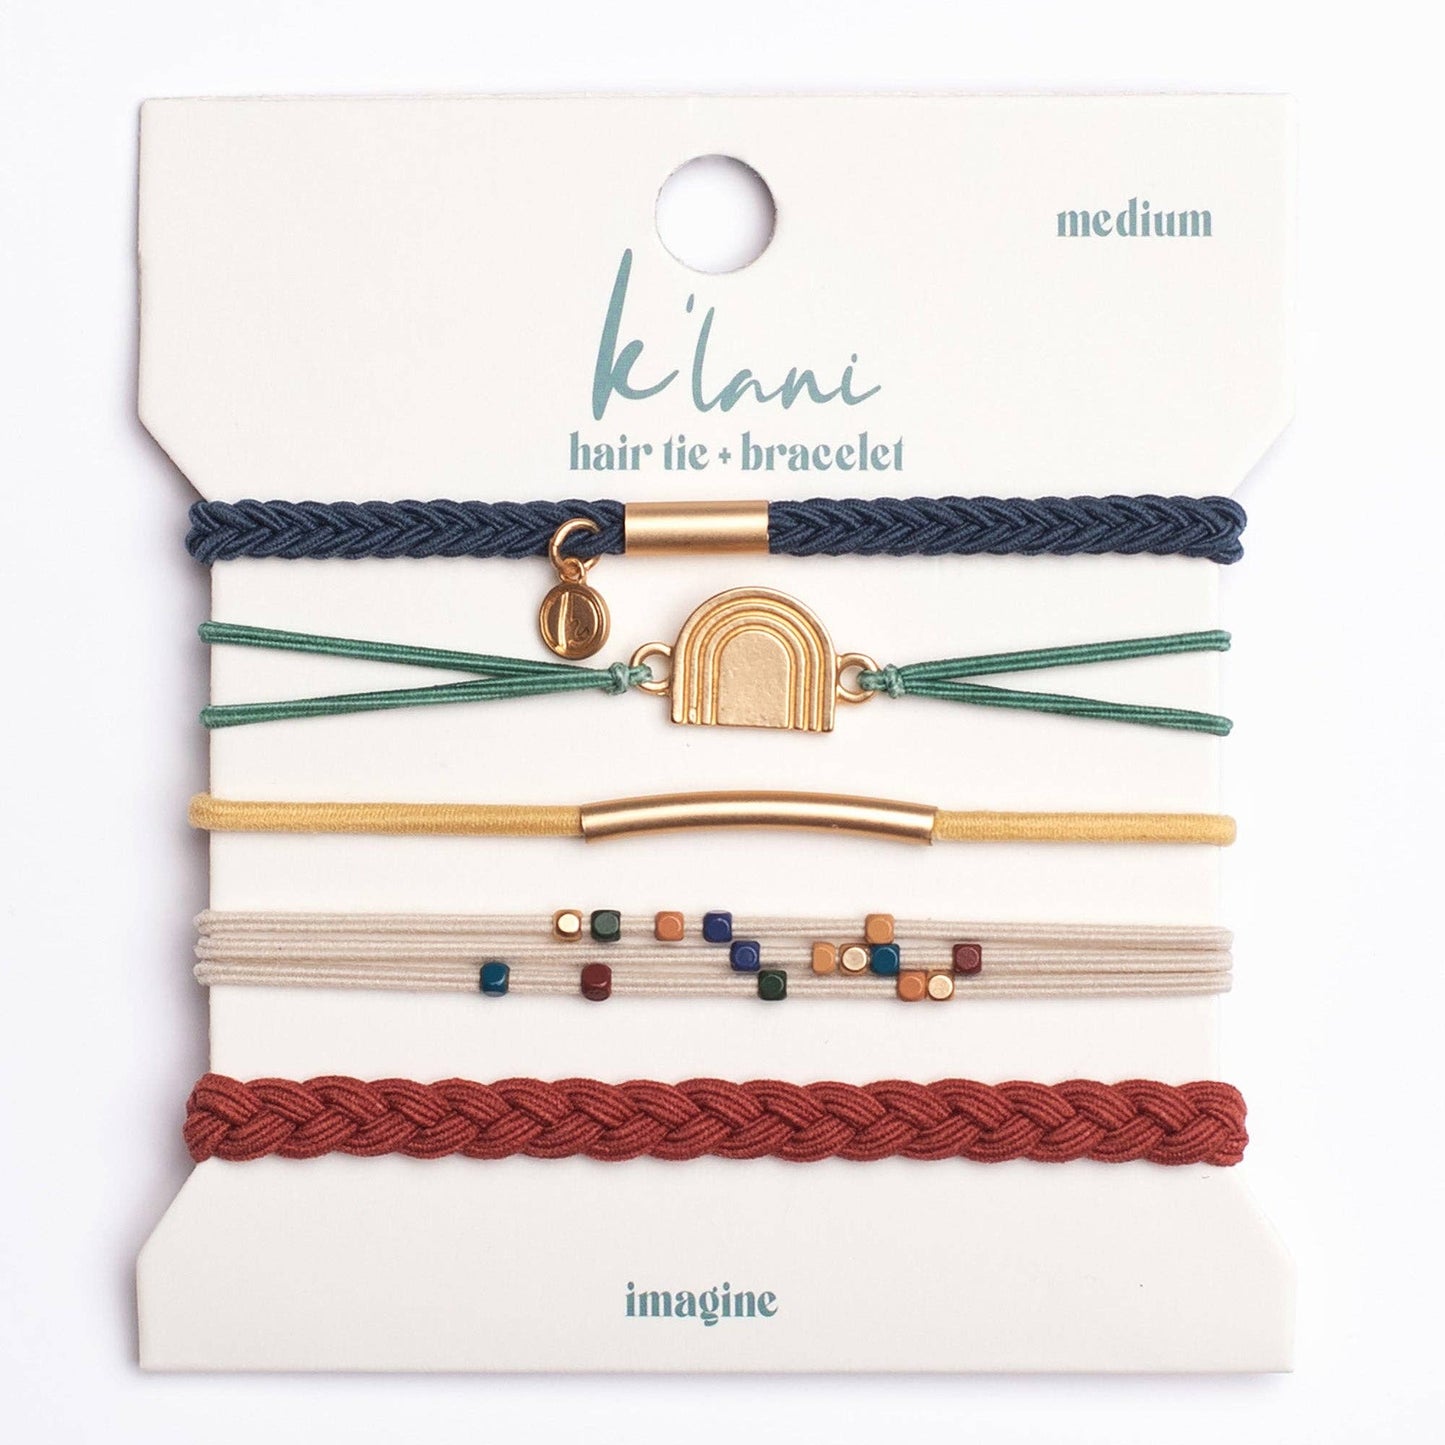 K'Lani hair tie bracelets - Imagine: Large